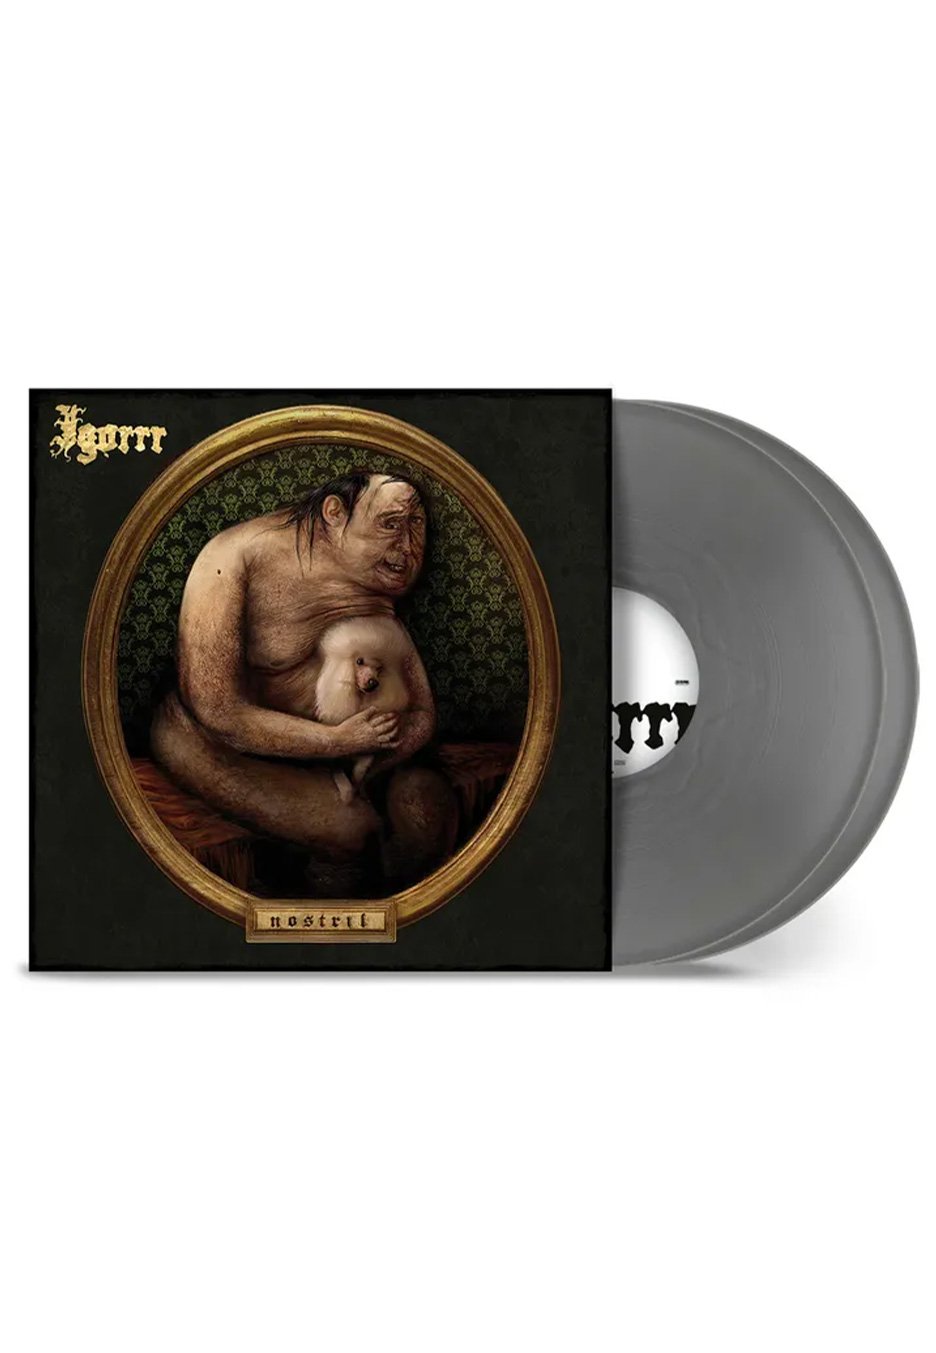 Igorrr - Nostril Ltd. Silver - Colored 2 Vinyl